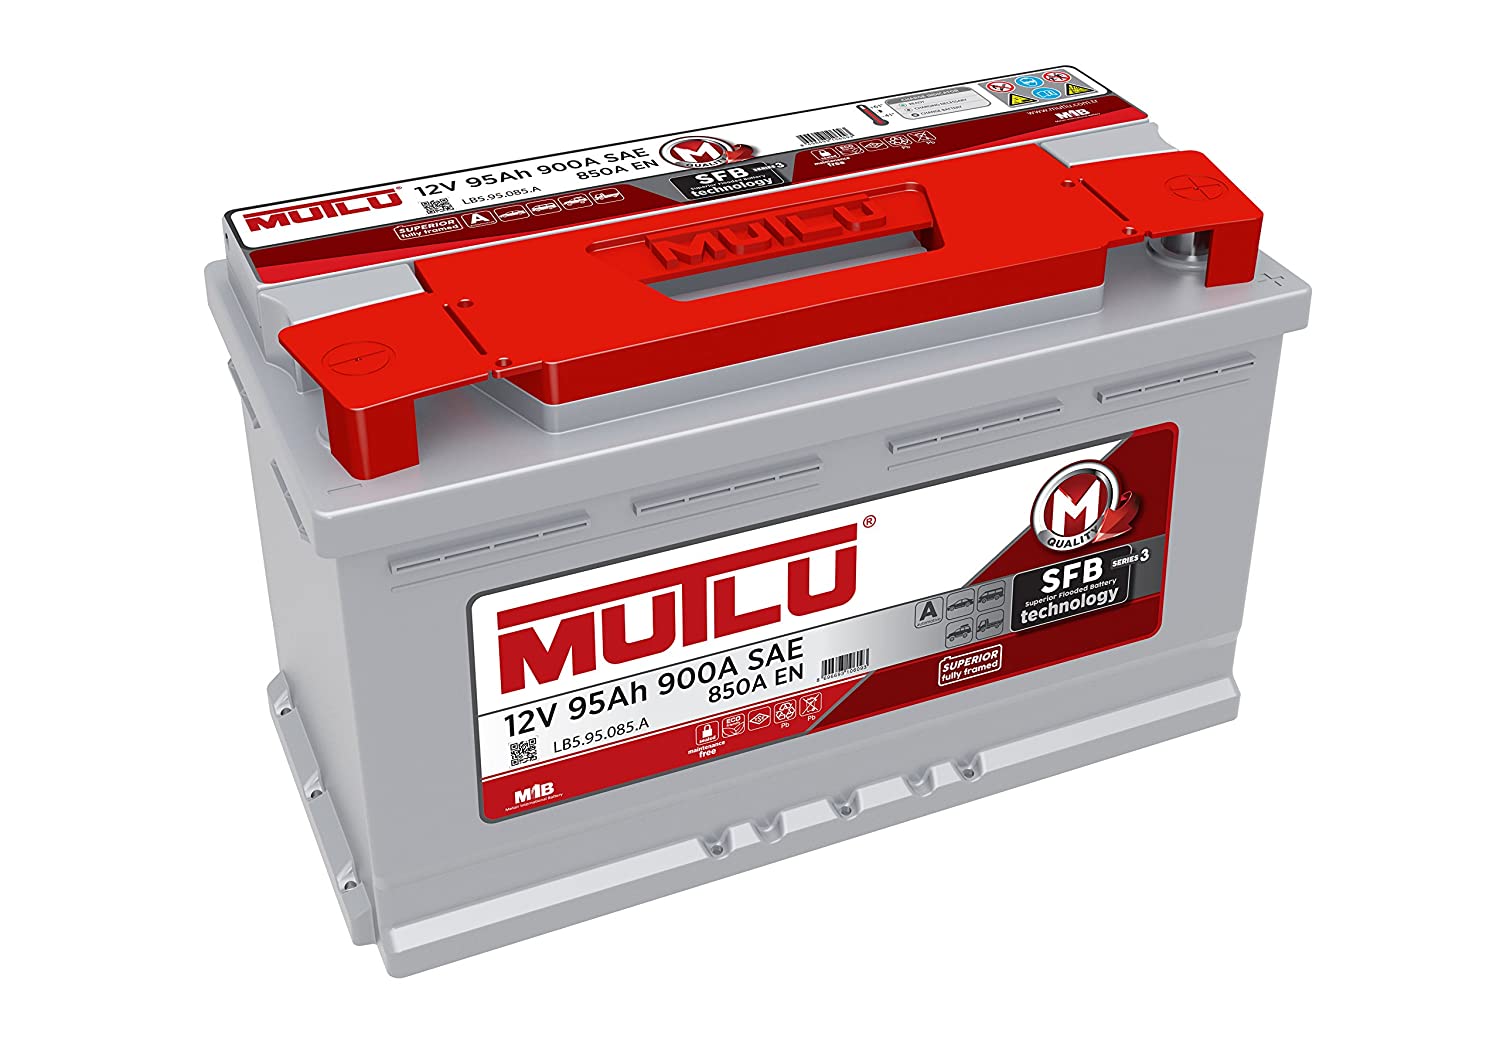 Mutlu Super Flood Battery 3 - автомобильный аккумулятор